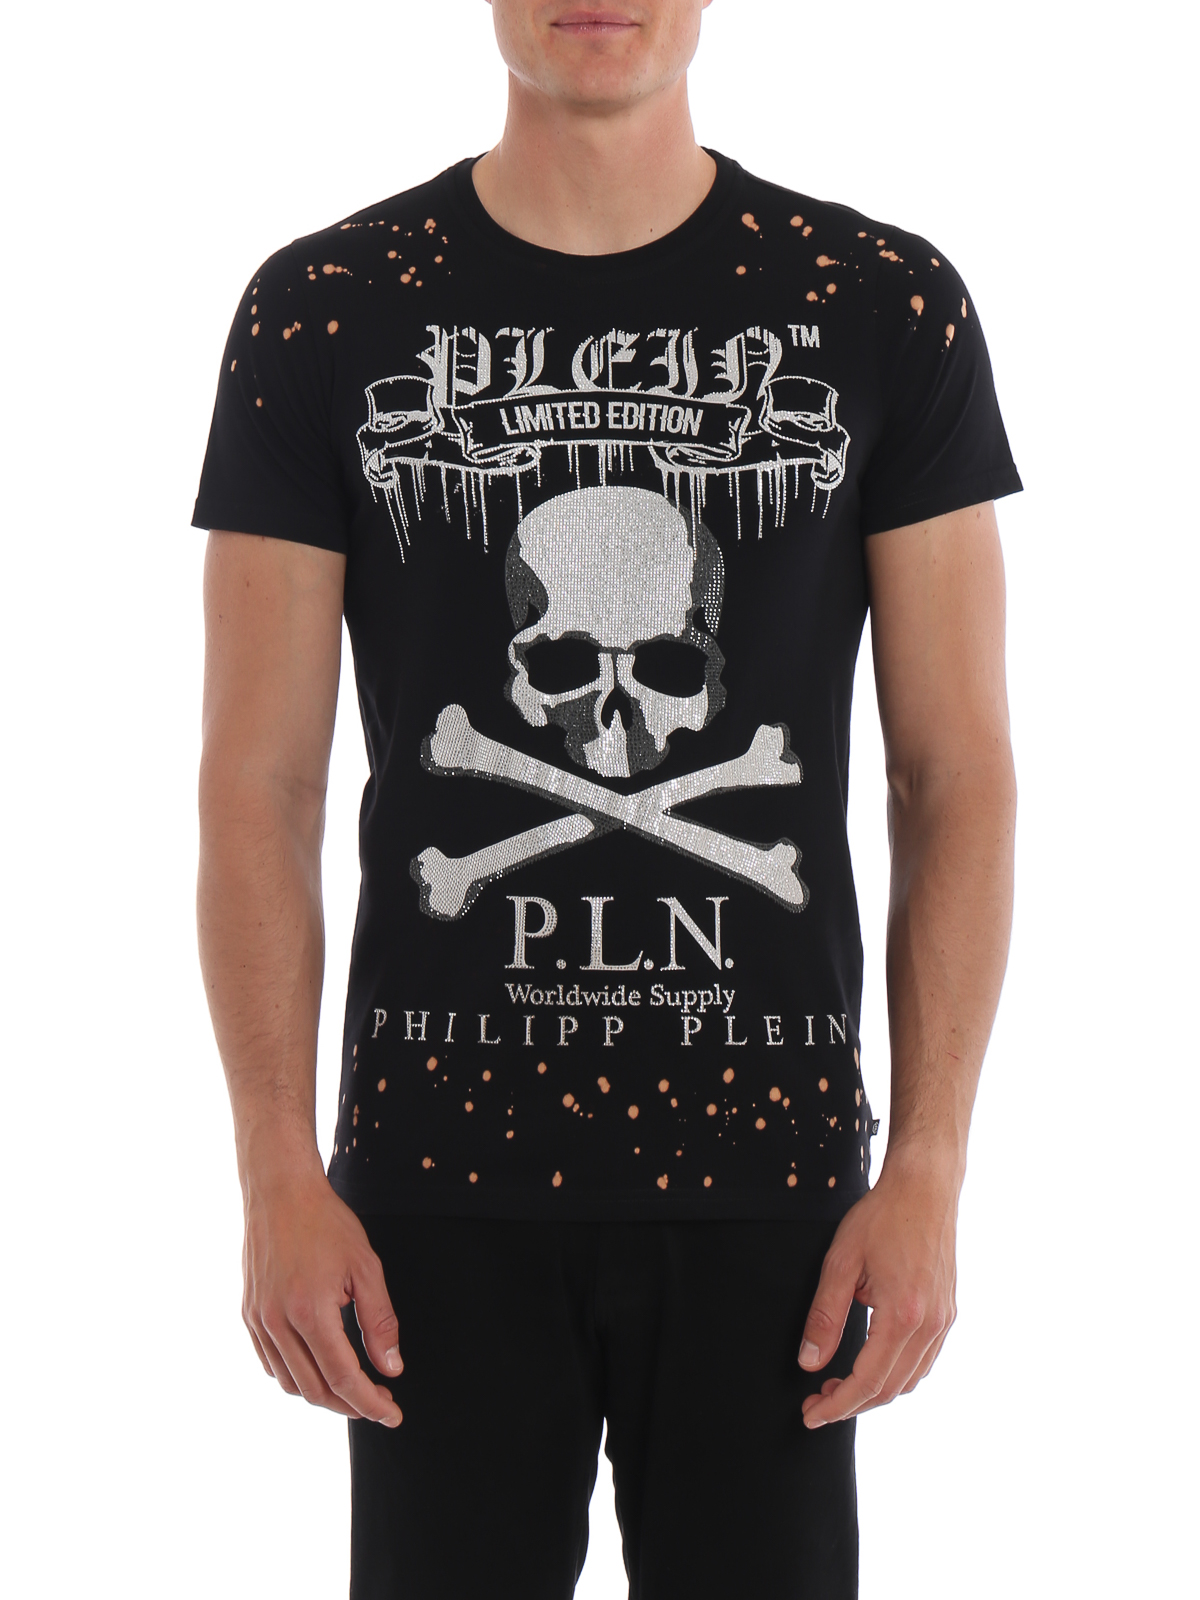 philipp plein limited edition t shirt